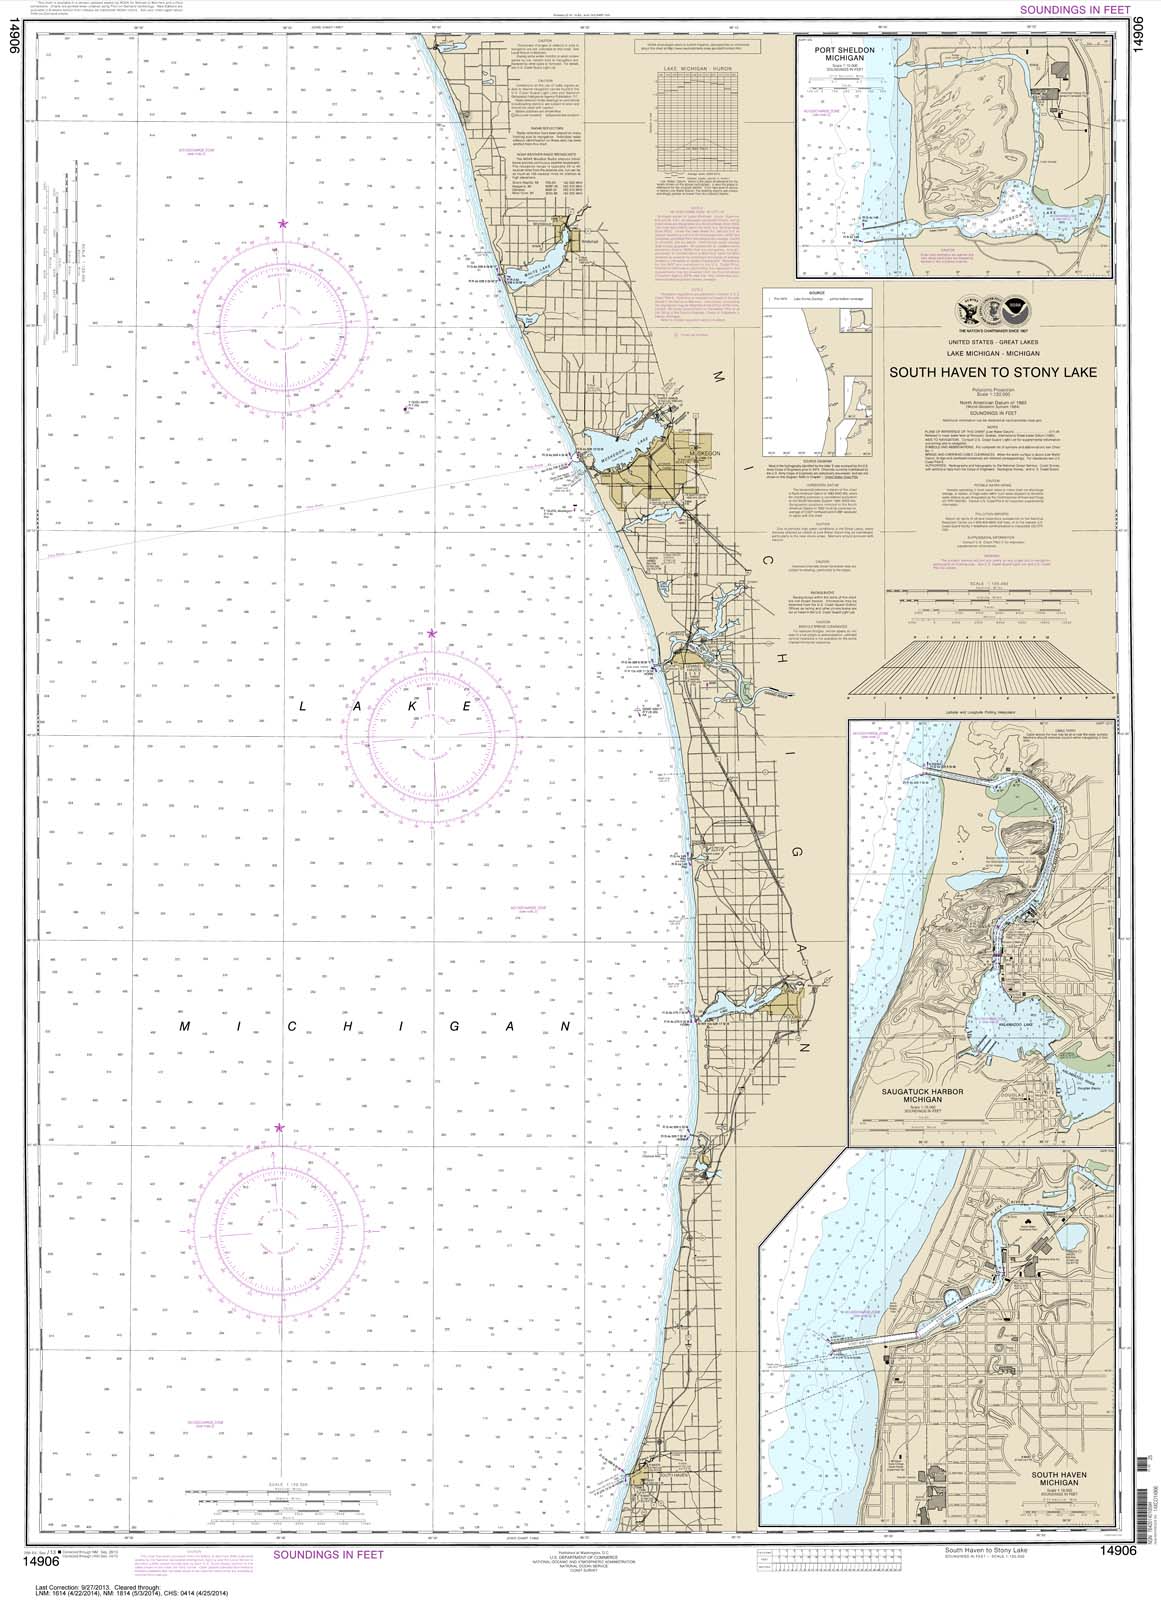 HISTORICAL NOAA Chart 14906: South Haven to Stony Lake;South Haven;Port Sheldon;Saugatuck Harbor